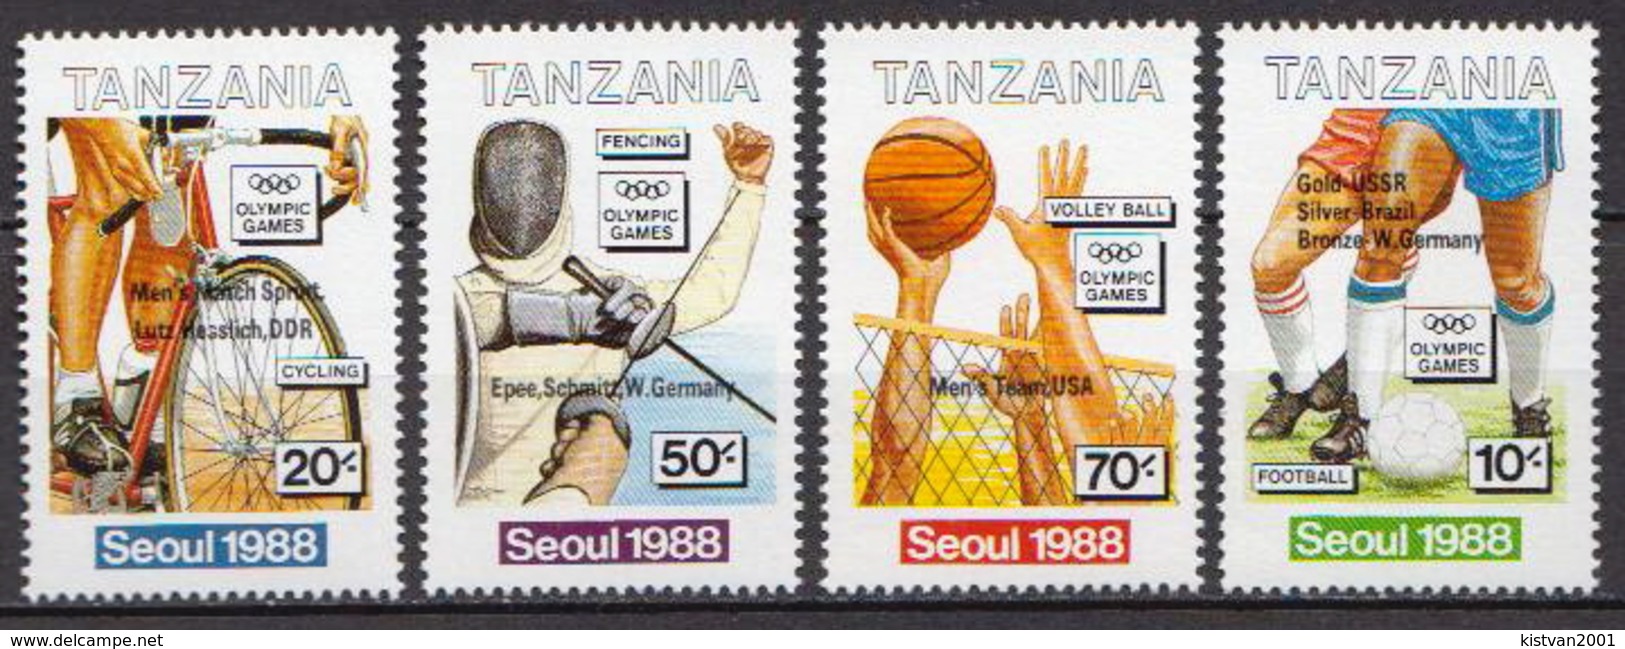 Tanzania MNH Overprinted Set And SS - Summer 1988: Seoul